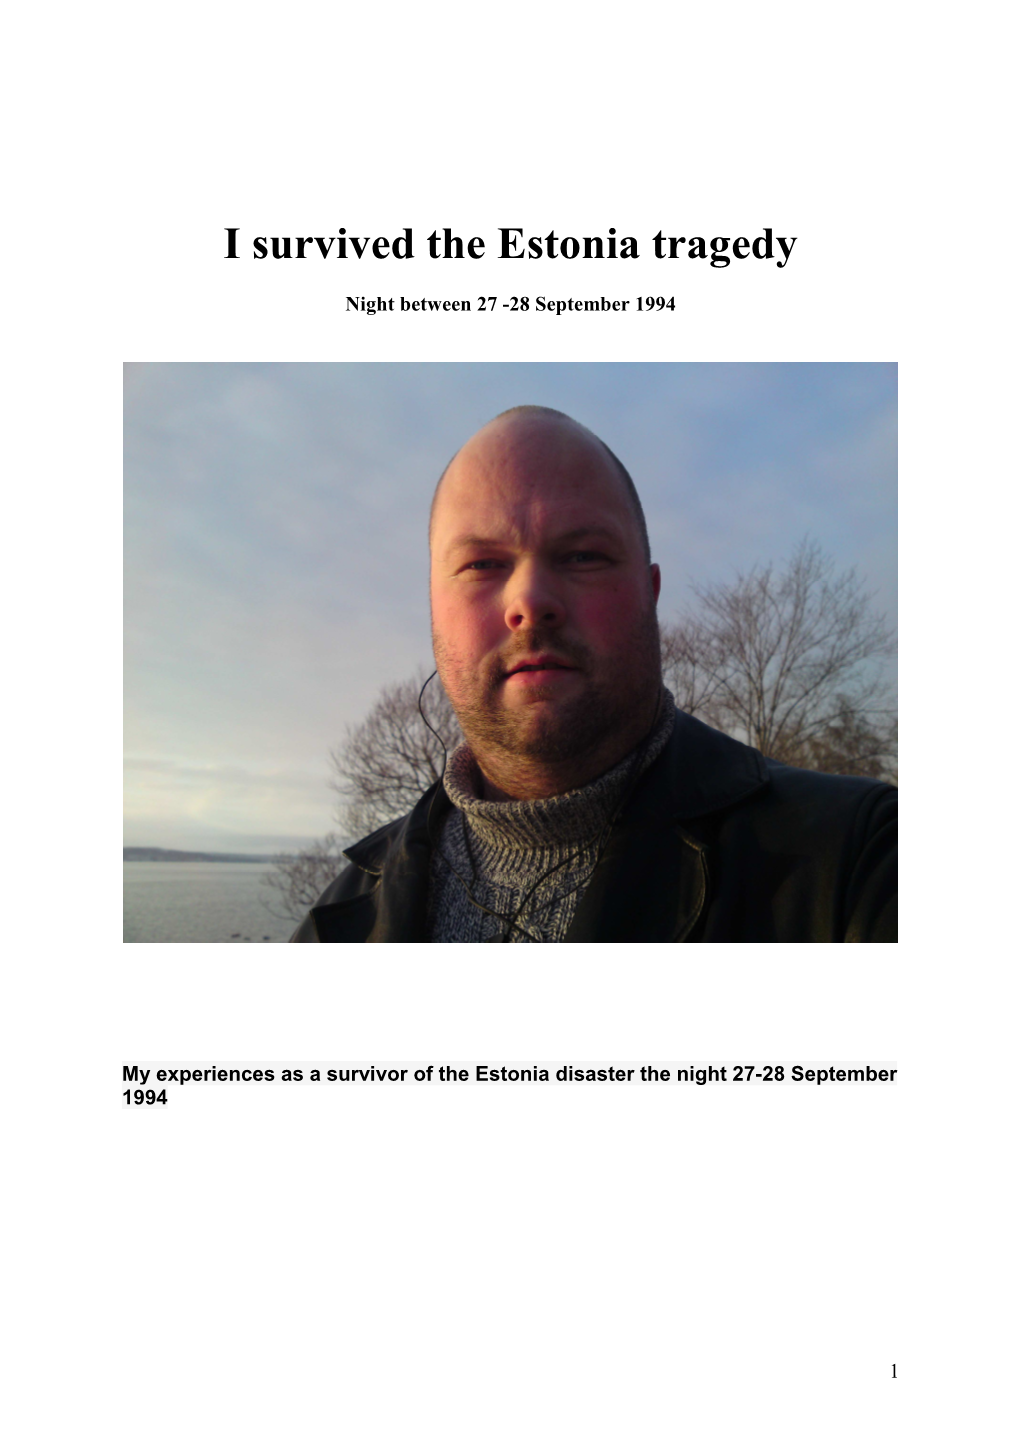 I Survived the Estonia Tragedy